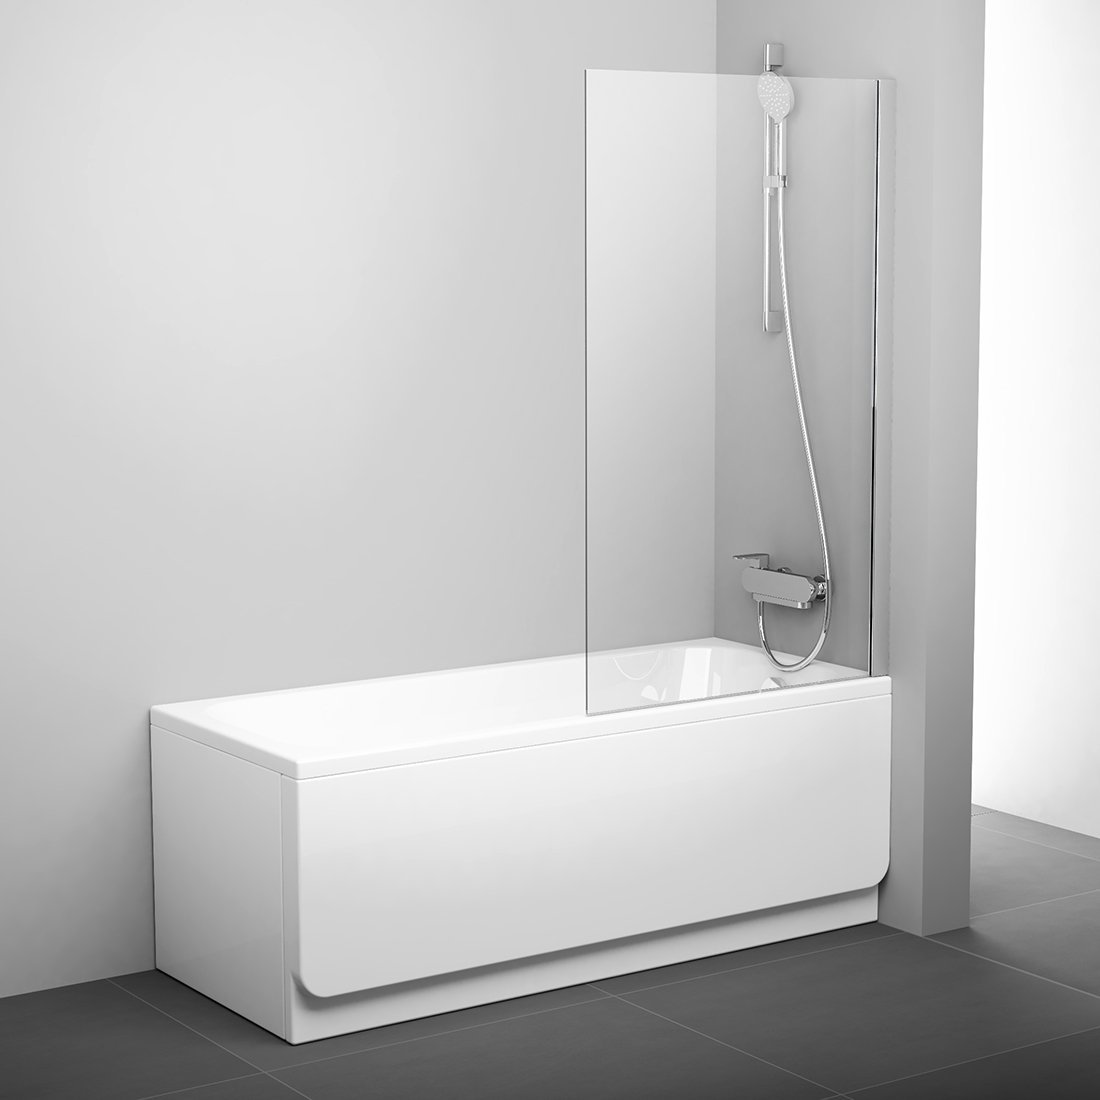 Шторка на ванну Ravak PVS1-80 блестящая+ прозрачное стекло, серый